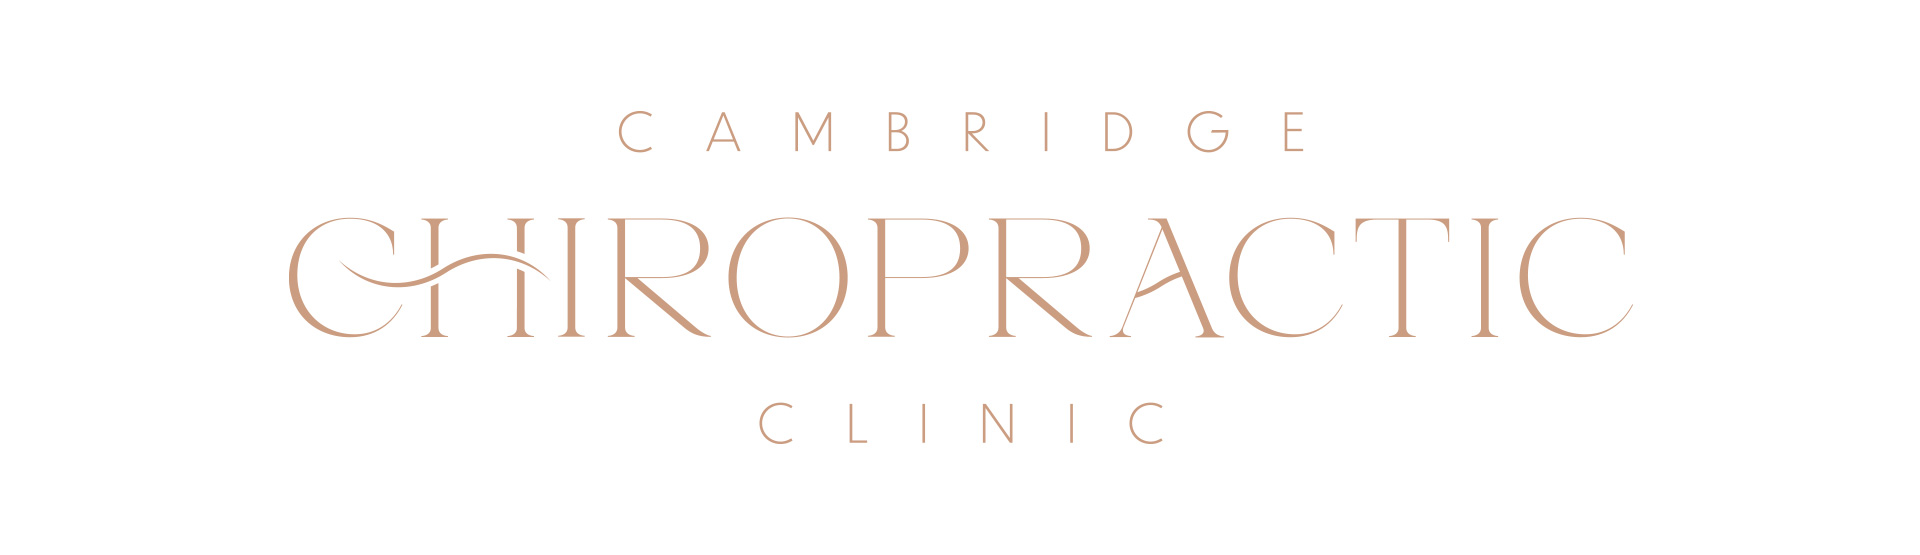 cambridge chiropractic clinic logo design, Ashleigh May Design